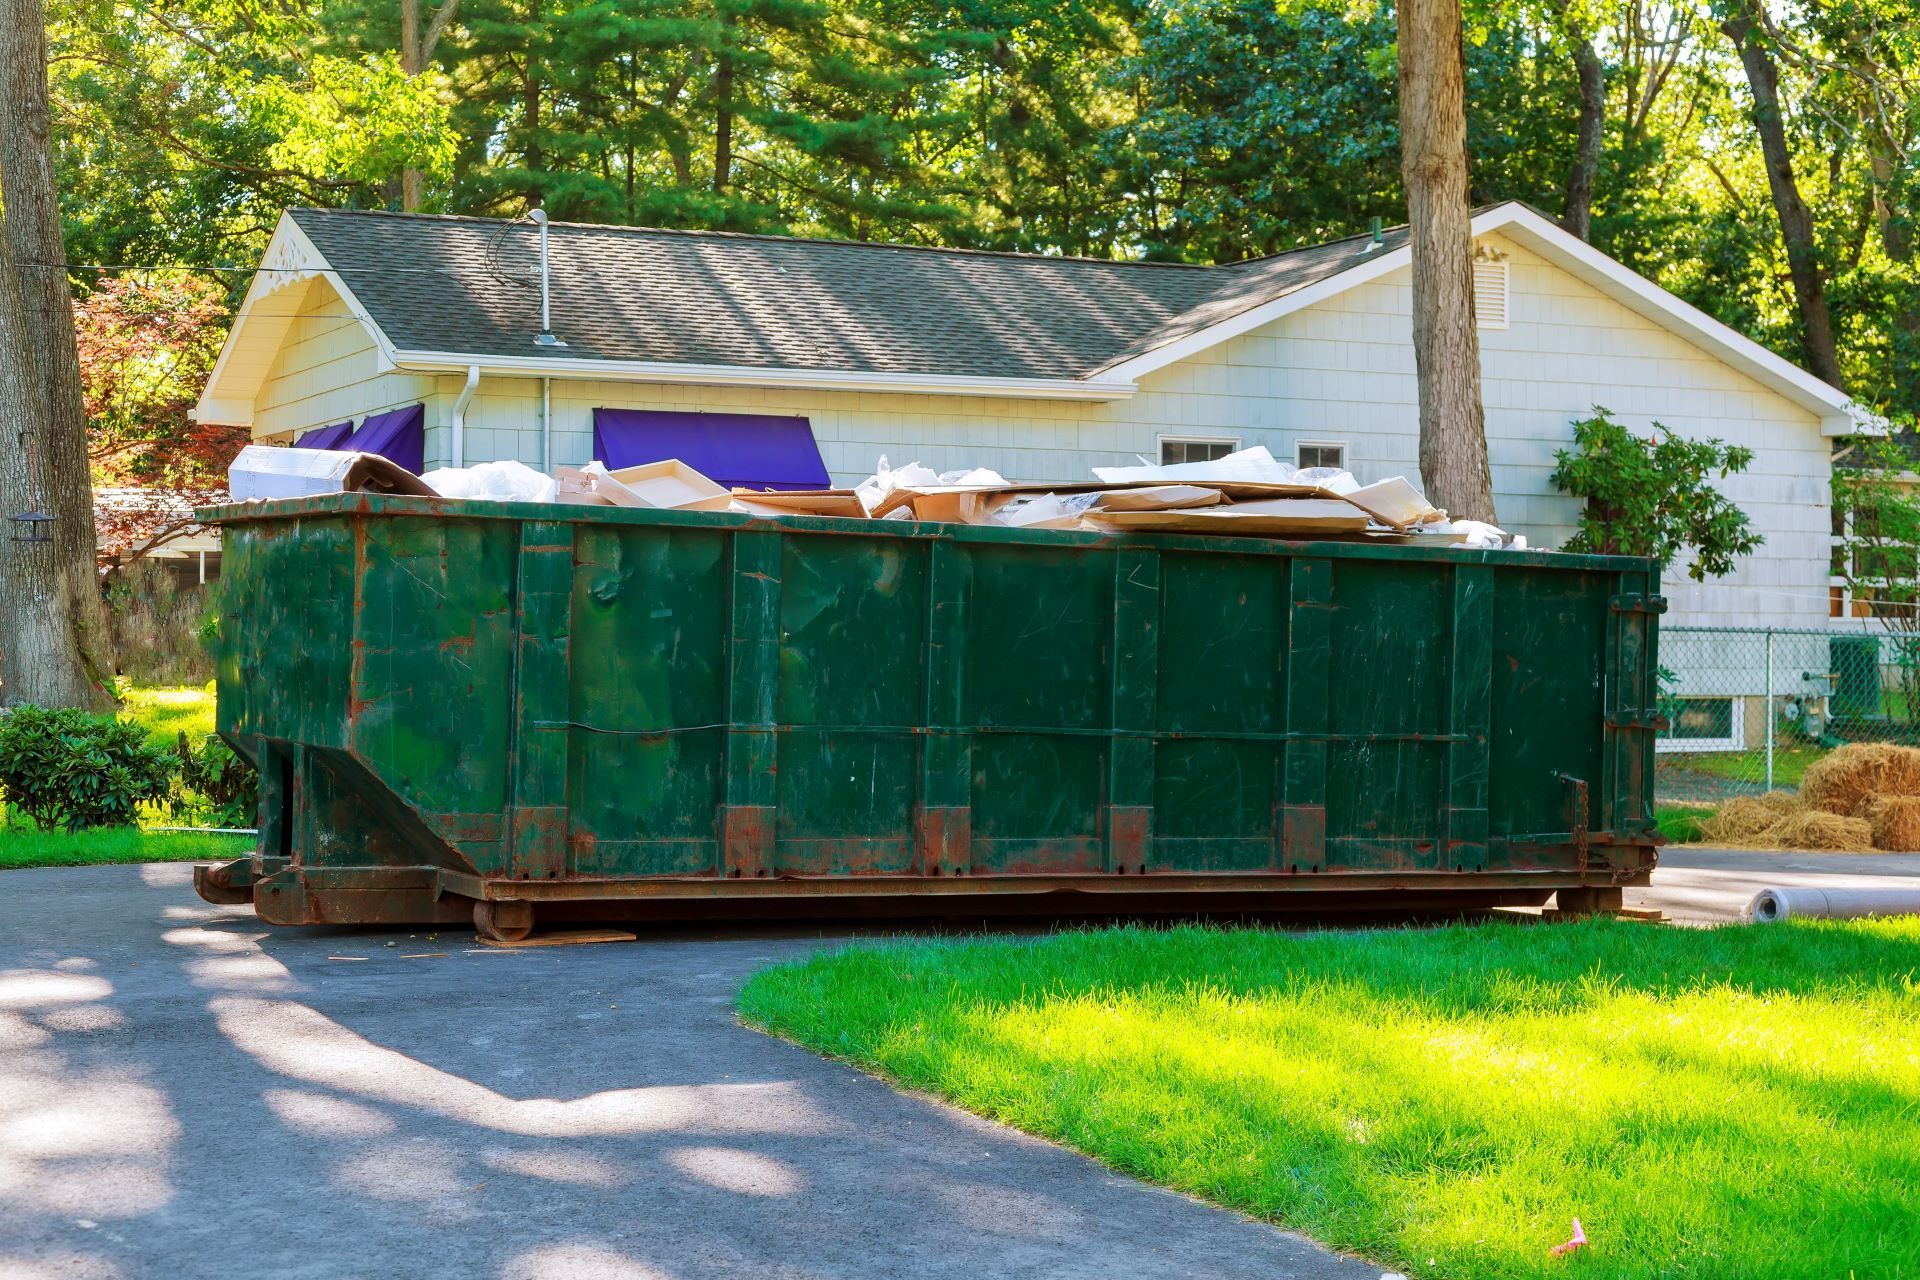 green dumpster rental in front of house full